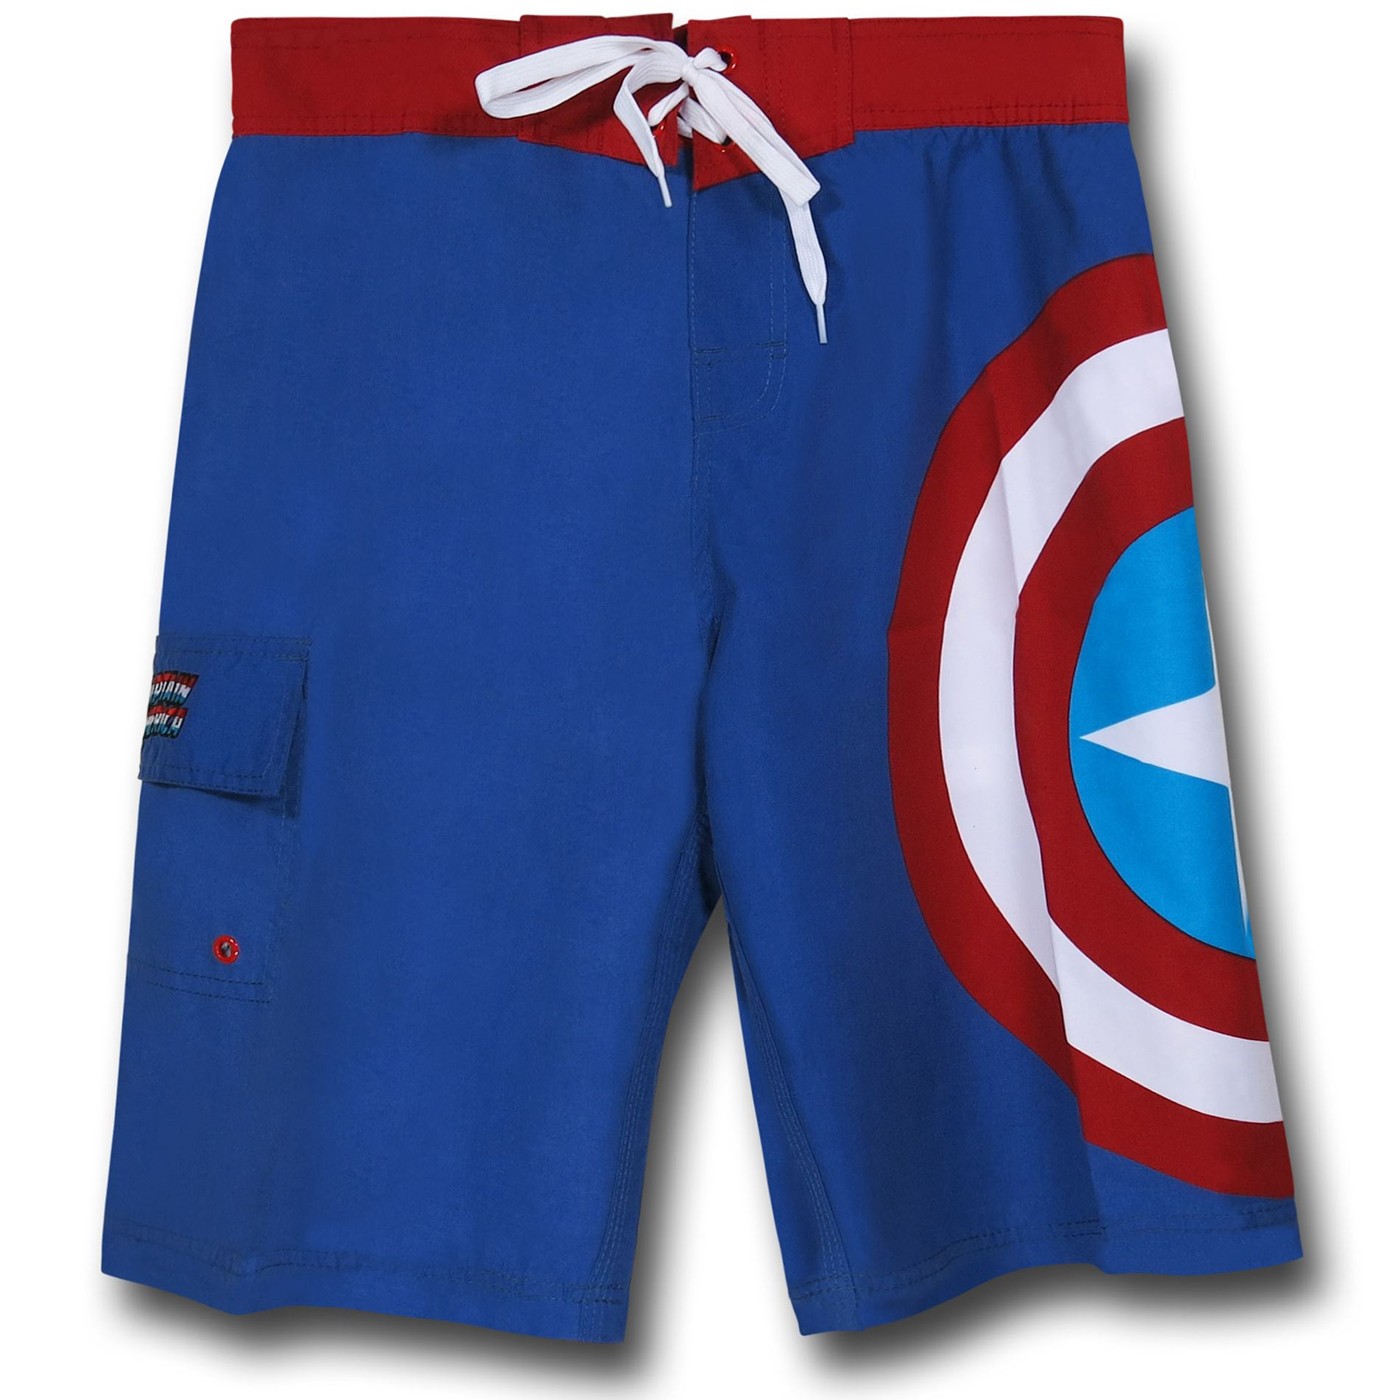 Captain America Blue Board Shorts